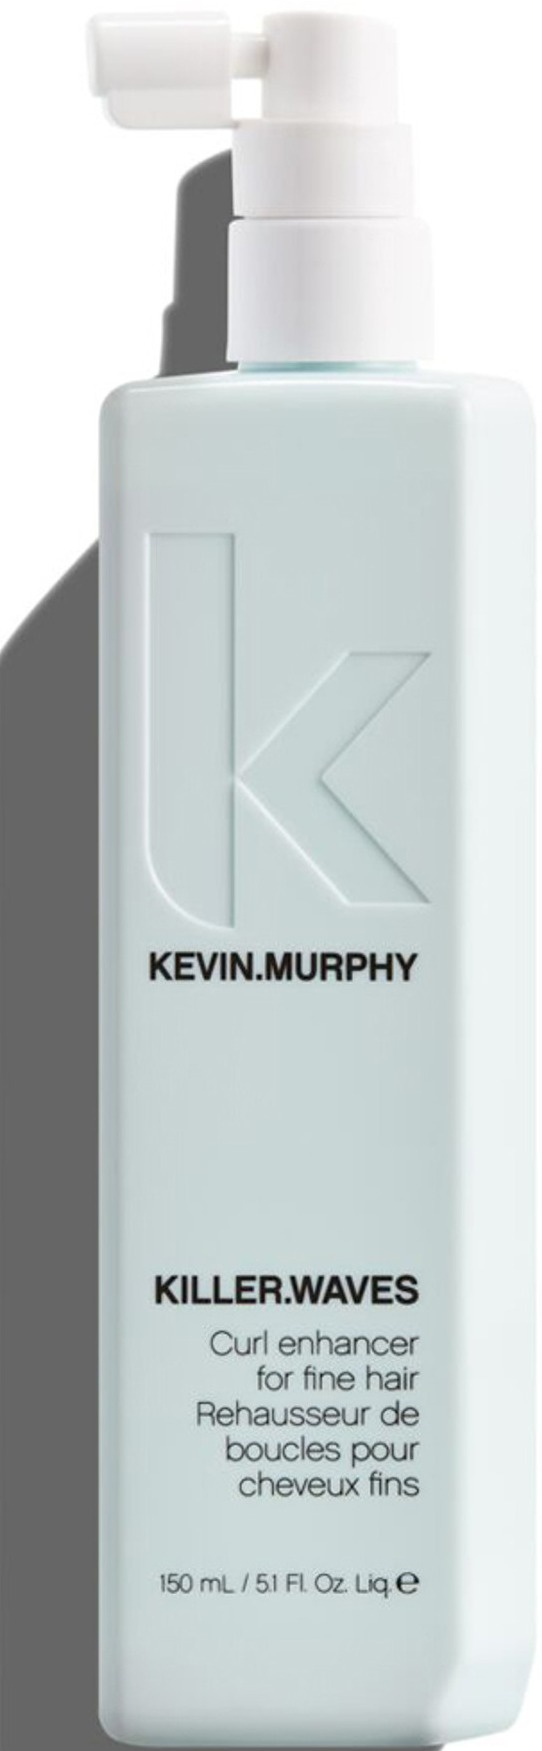 Kevin Murphy Killer.waves